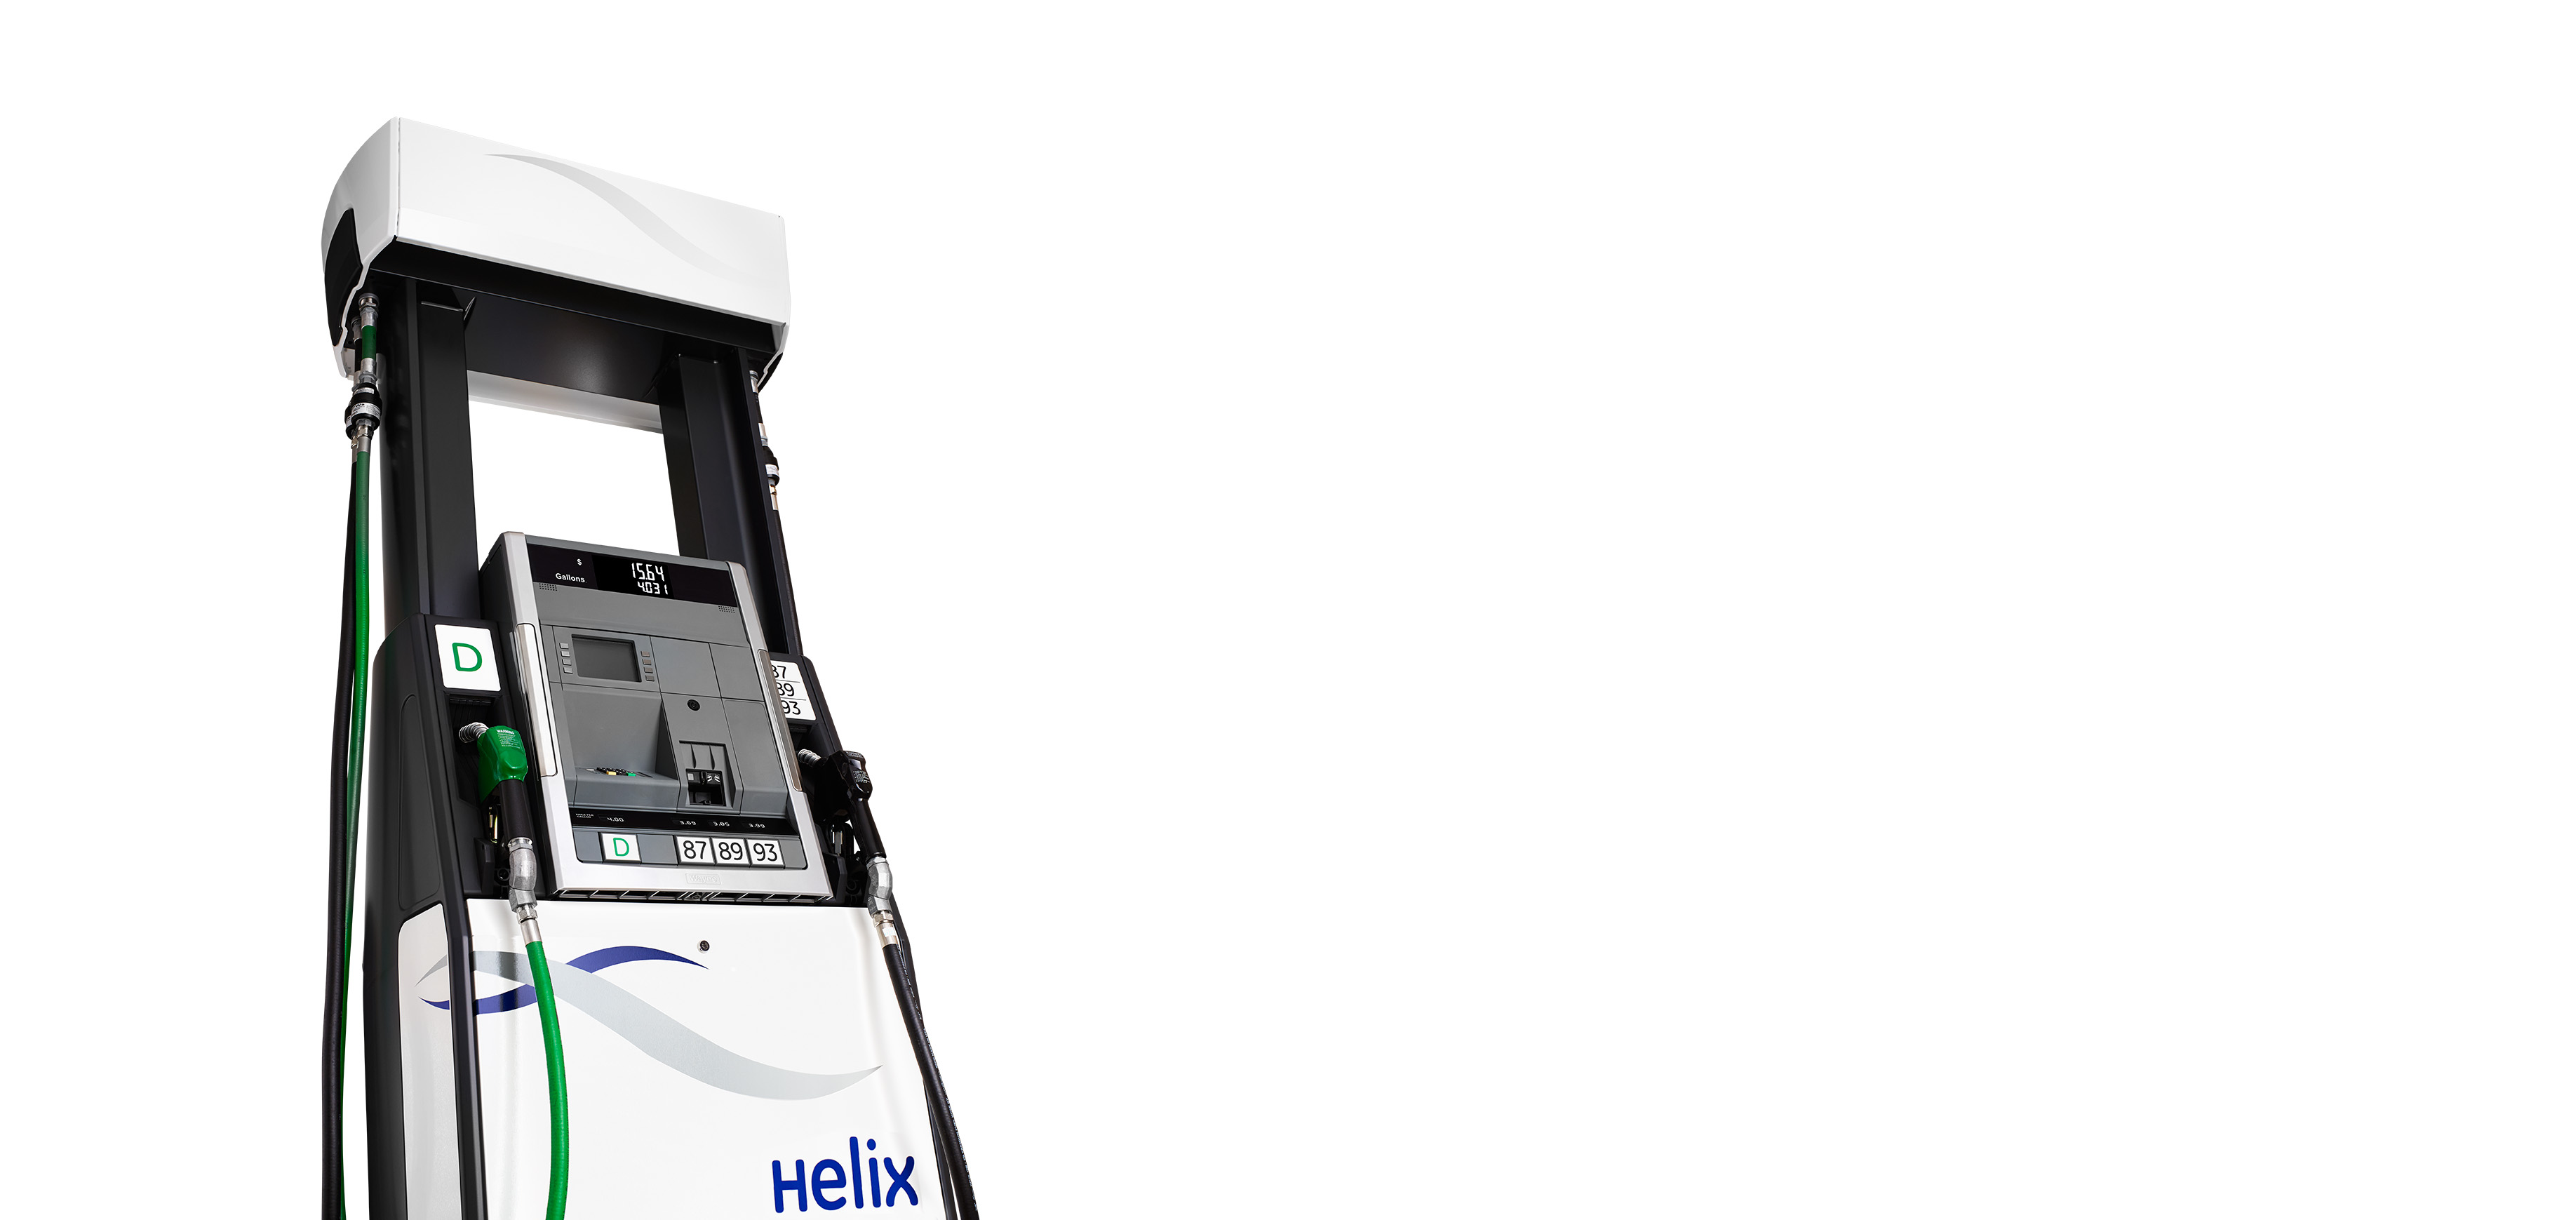 4000_Wayne Helix Fuel Dispenser_Stence_Image_05172013_ENG_8266.jpg